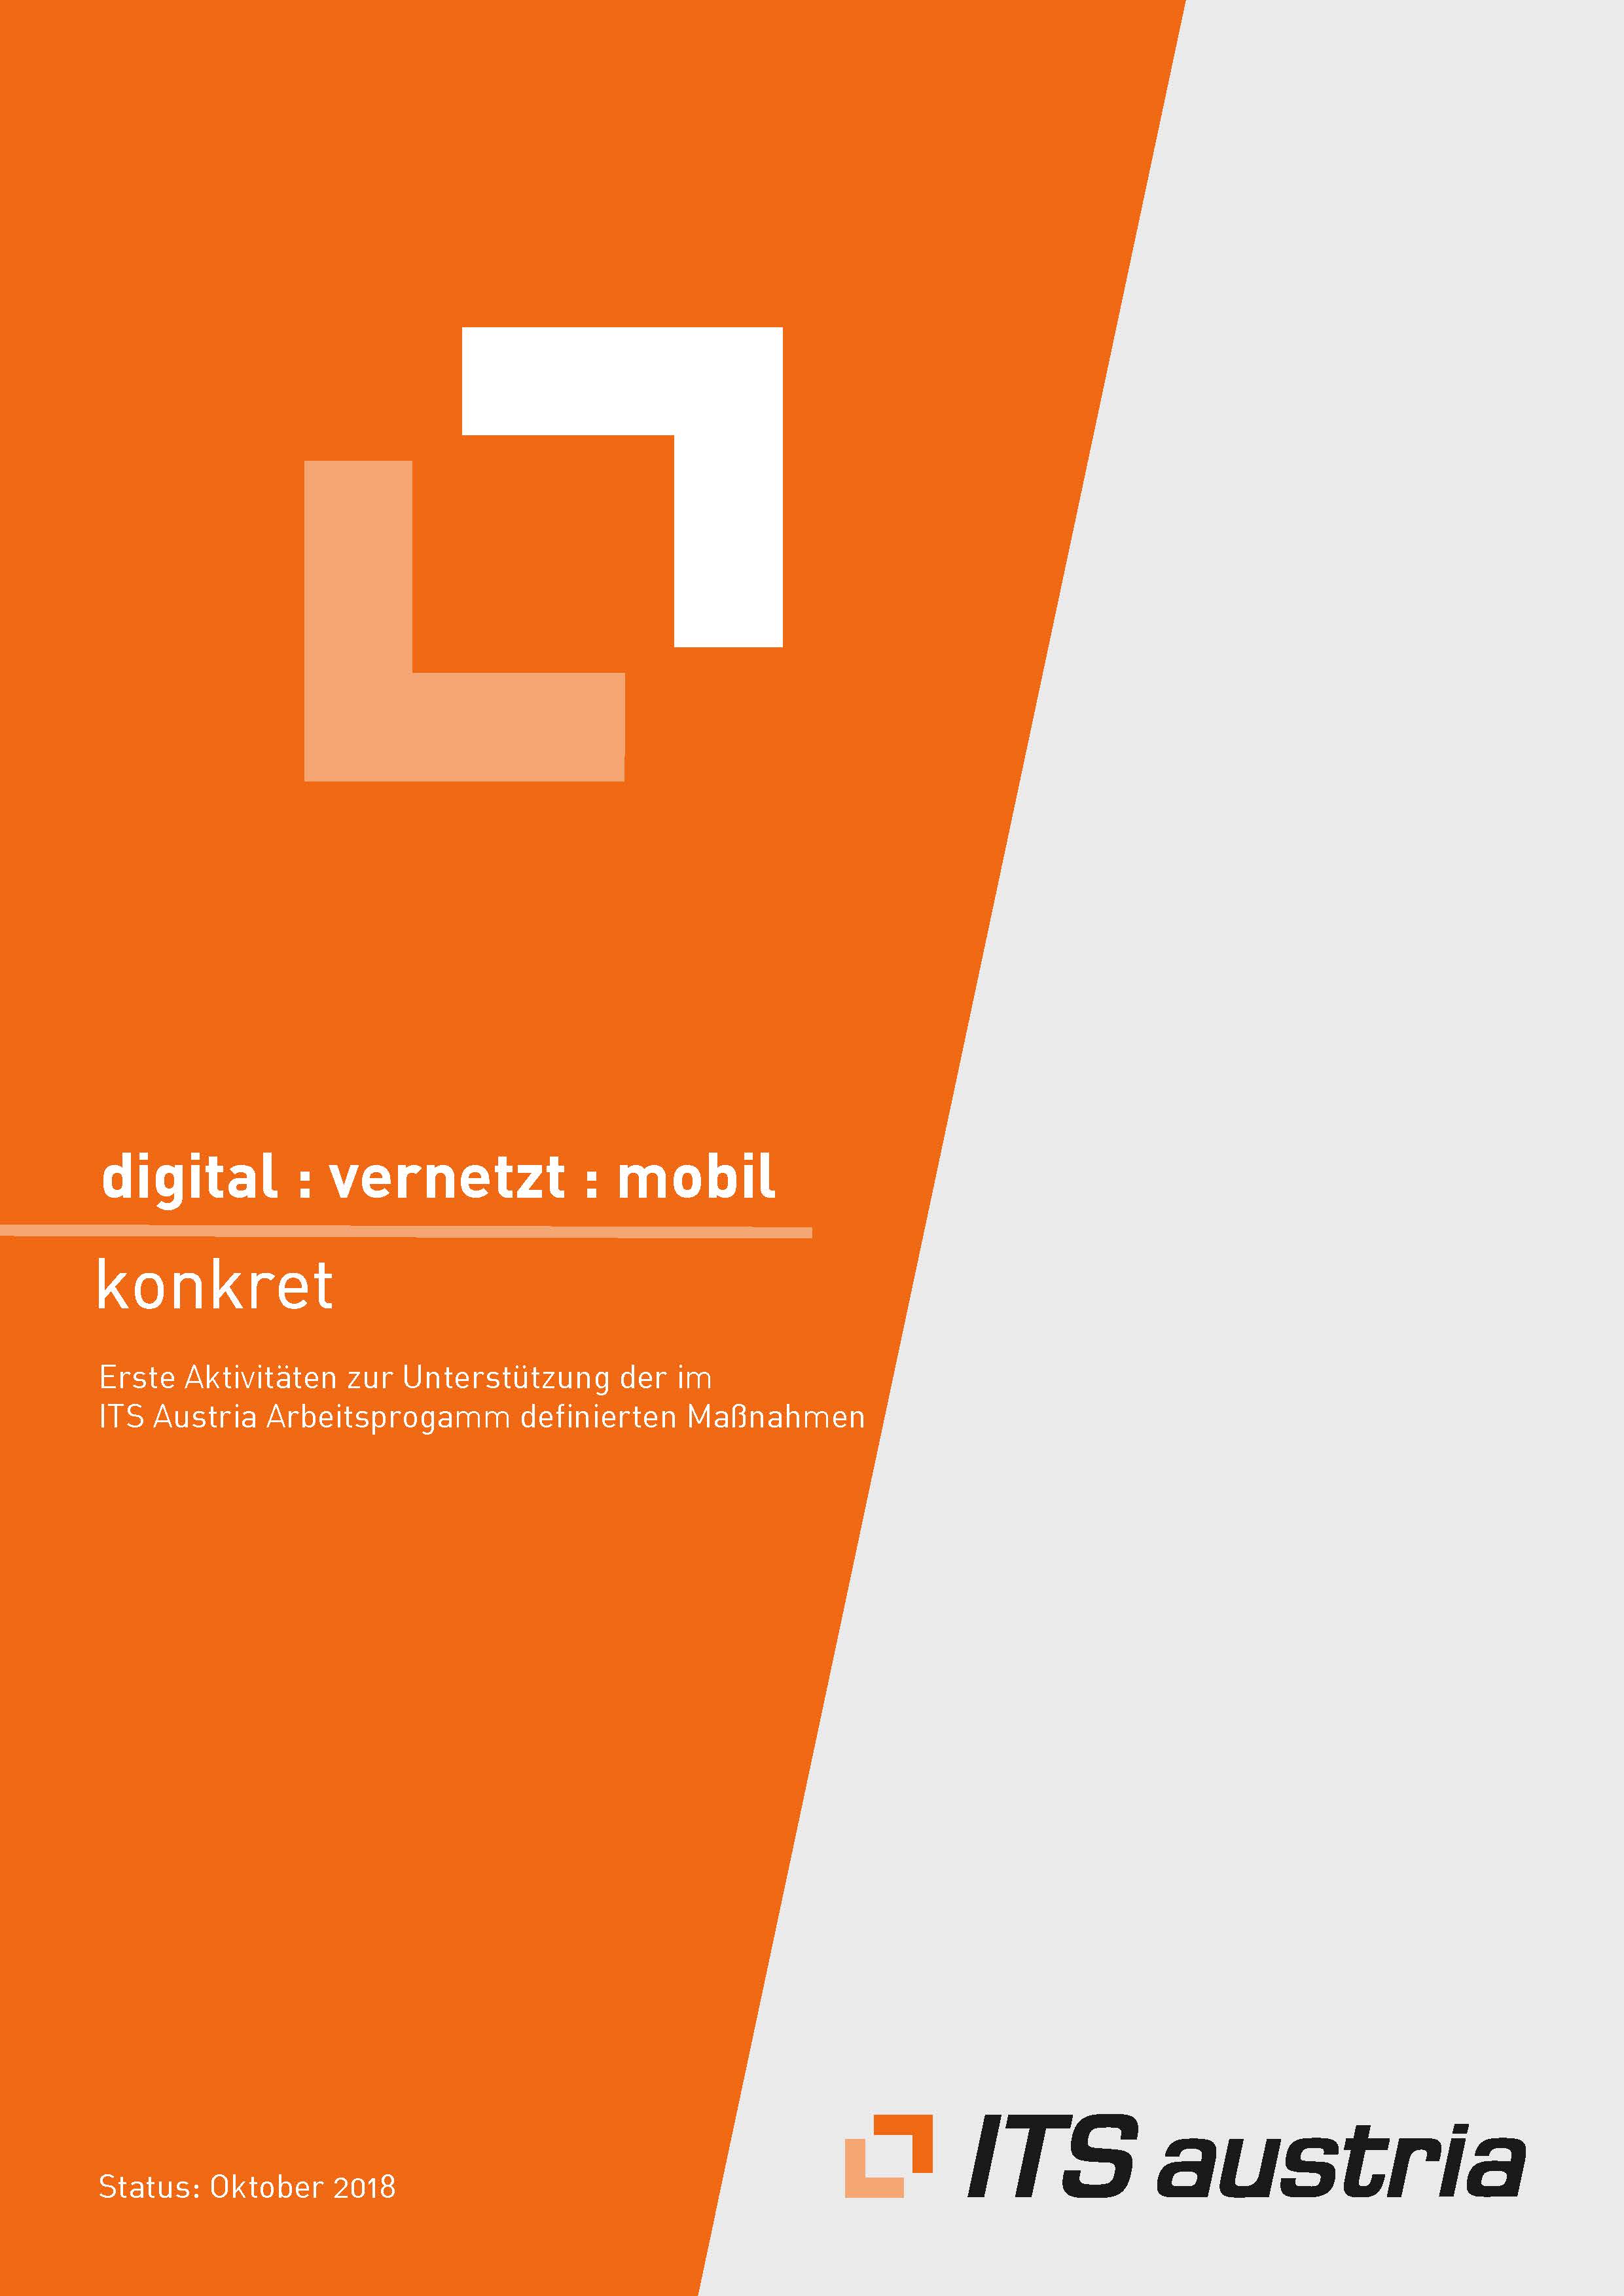 ITS Austria digital vernetzt mobil konkret Seite 1